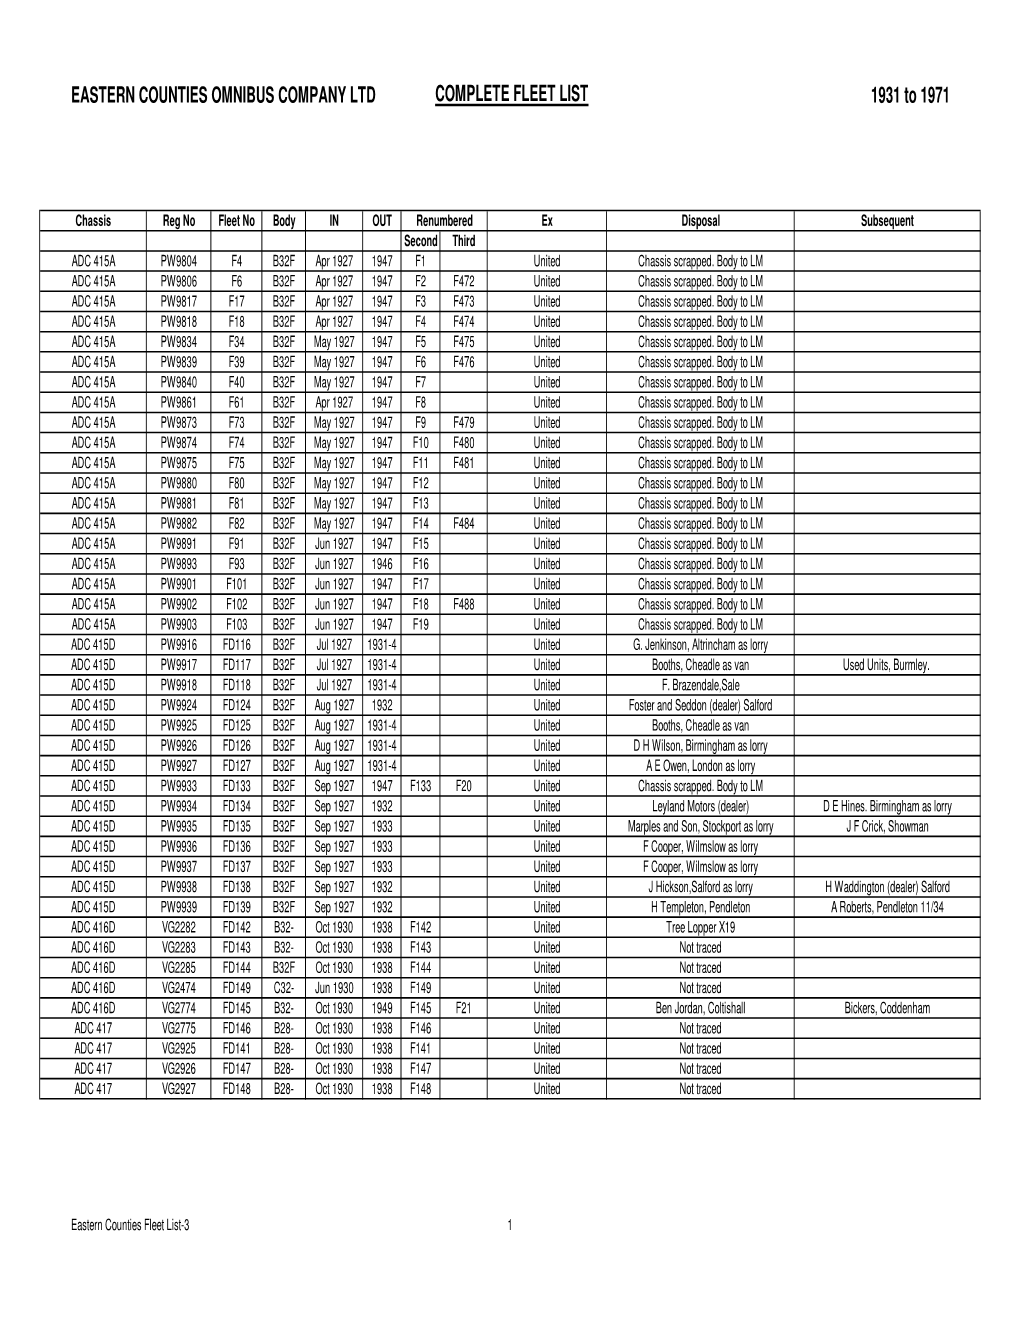 Eastern Counties Fleet List-3 1 EASTERN COUNTIES OMNIBUS COMPANY LTD COMPLETE FLEET LIST 1931 to 1971